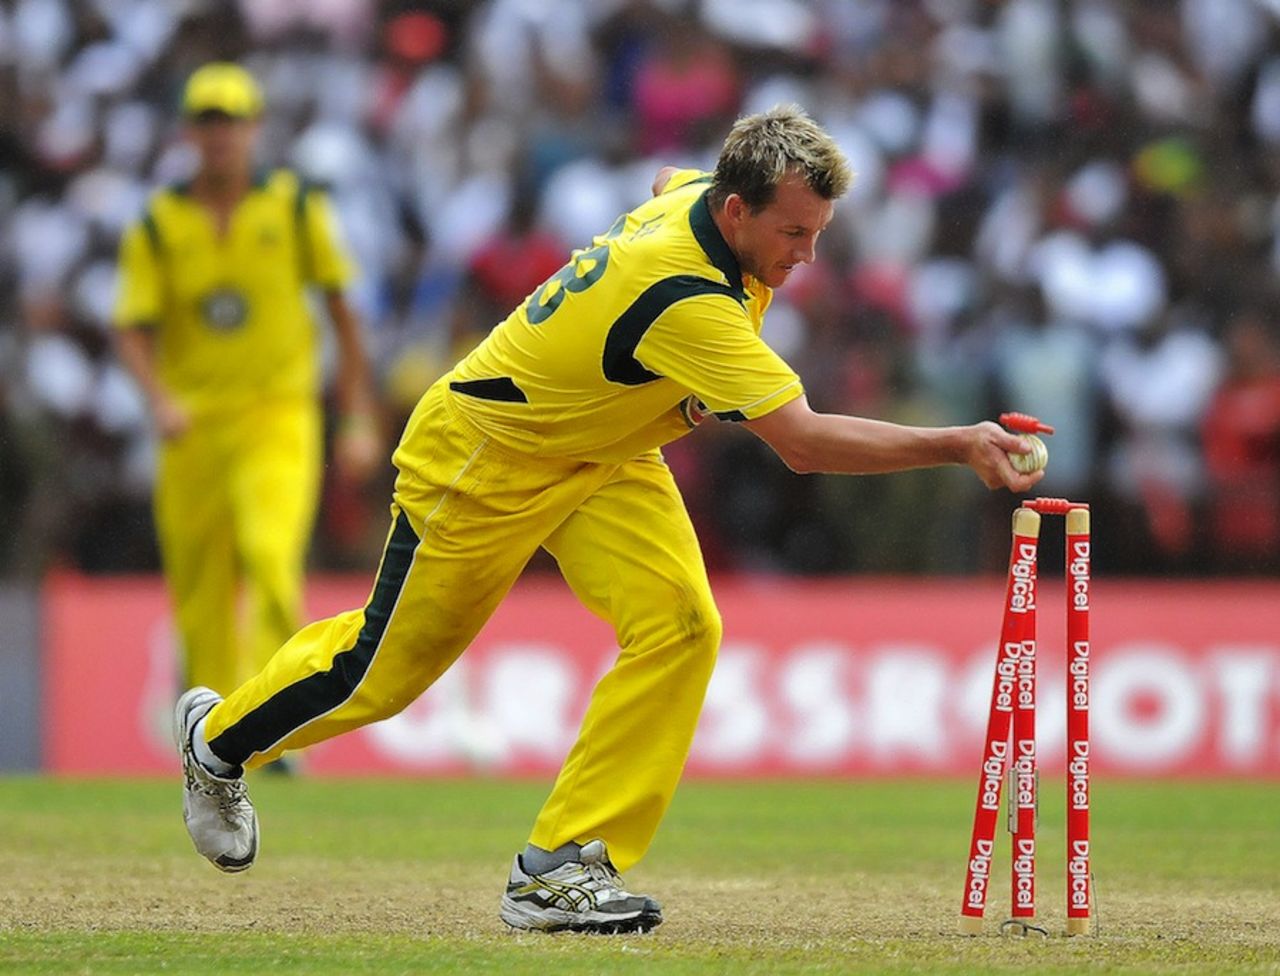 Brett Lee runs out Darren Sammy to tie the game, West Indies v Australia, 3rd ODI, St Vincent, March 20, 2012